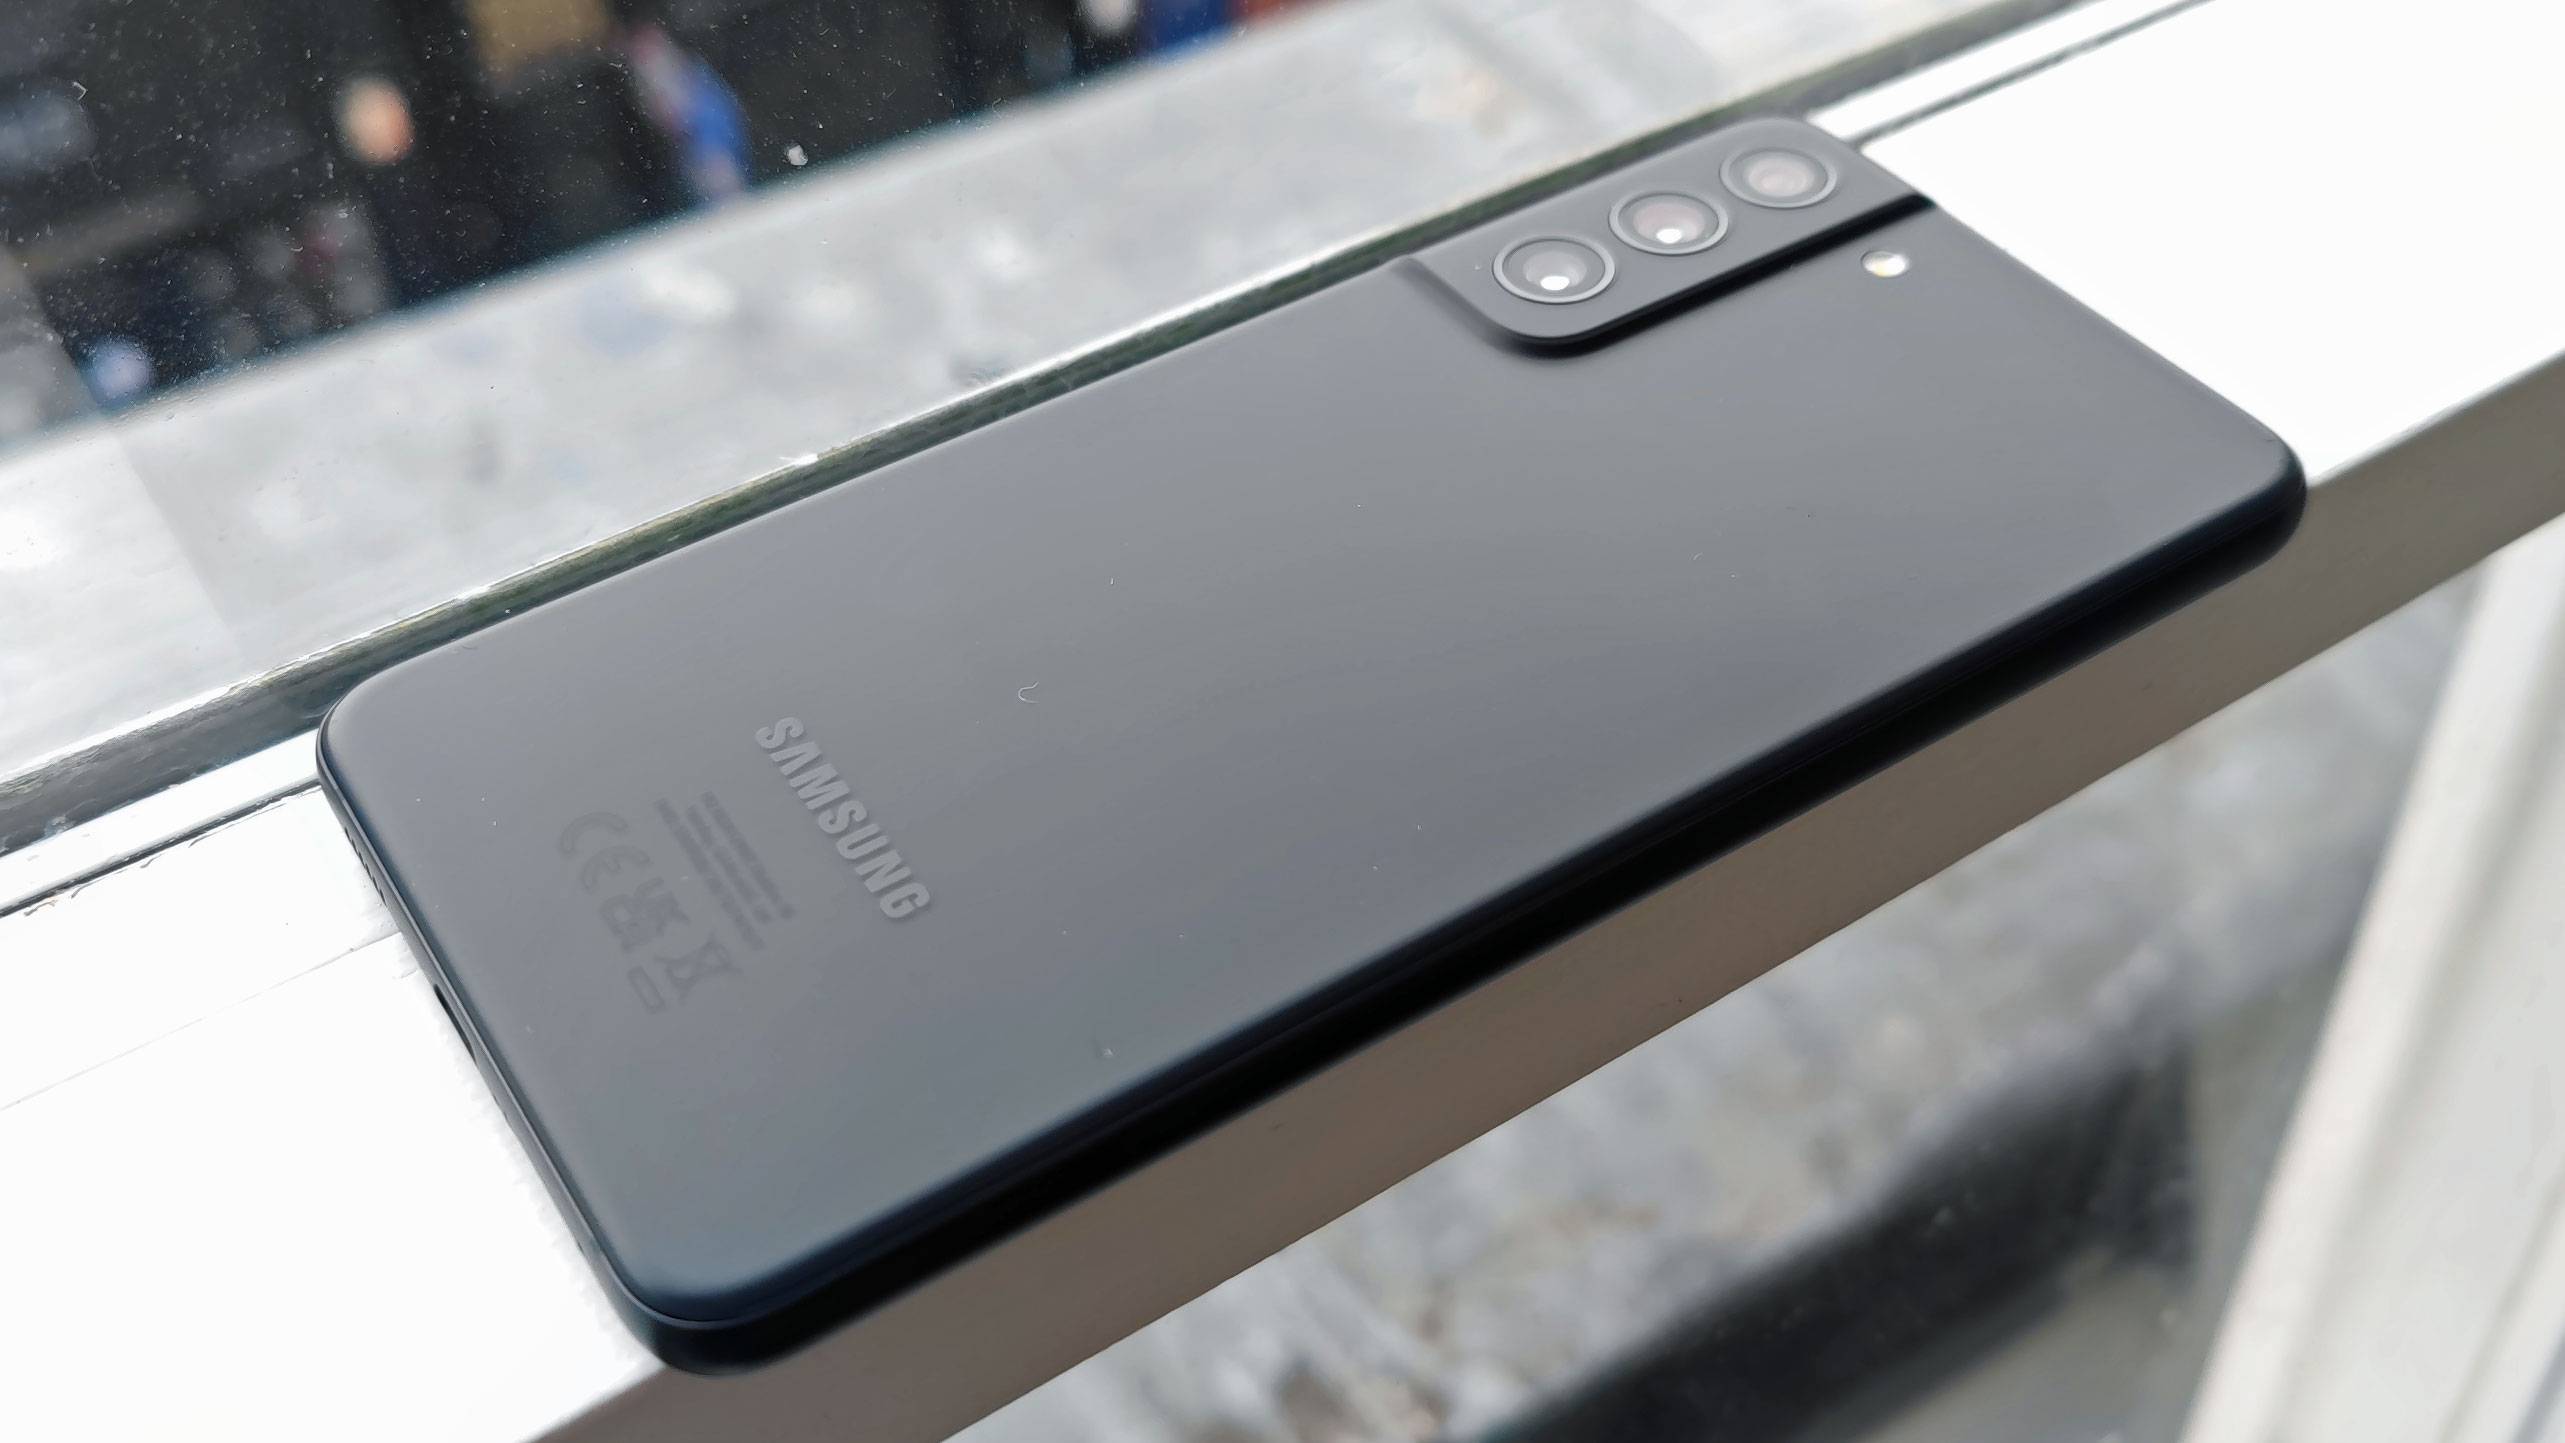 Samsung Galaxy S21 FE review: Super phone, super late - SamMobile